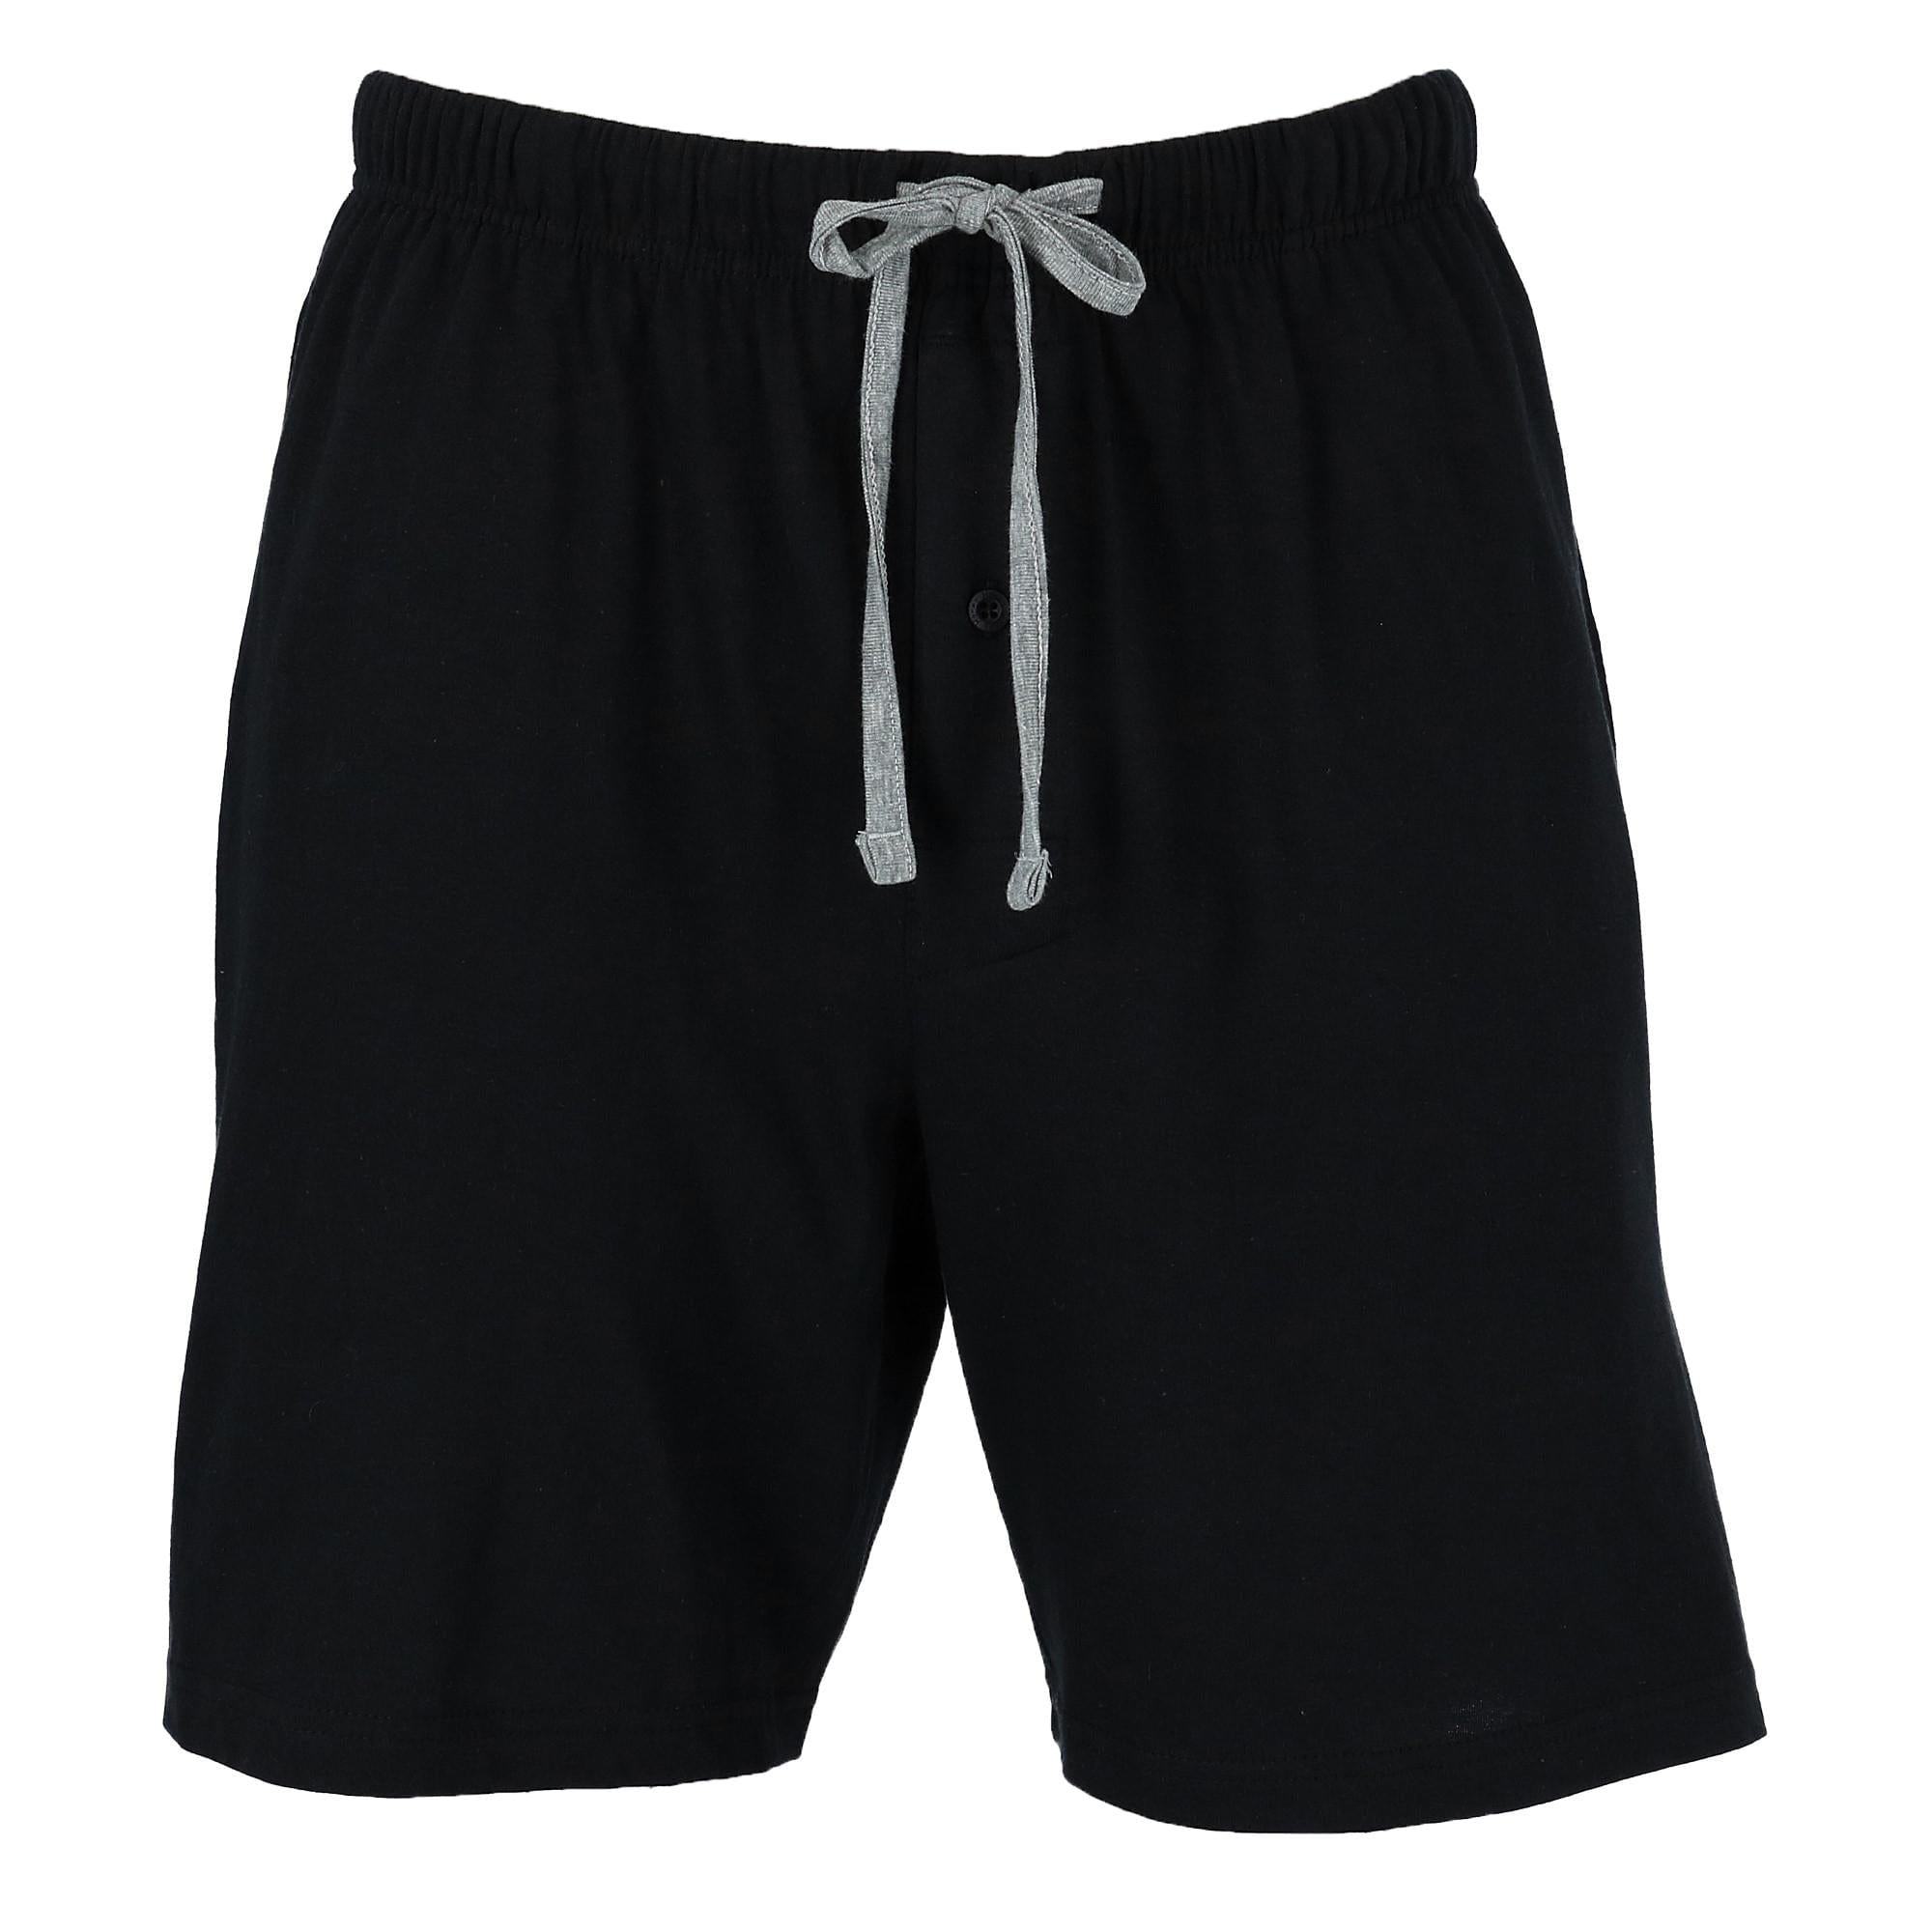 Hanes Mens 2-Pack Woven Stretch Pajama Short, Black/Black, Medium at   Men's Clothing store